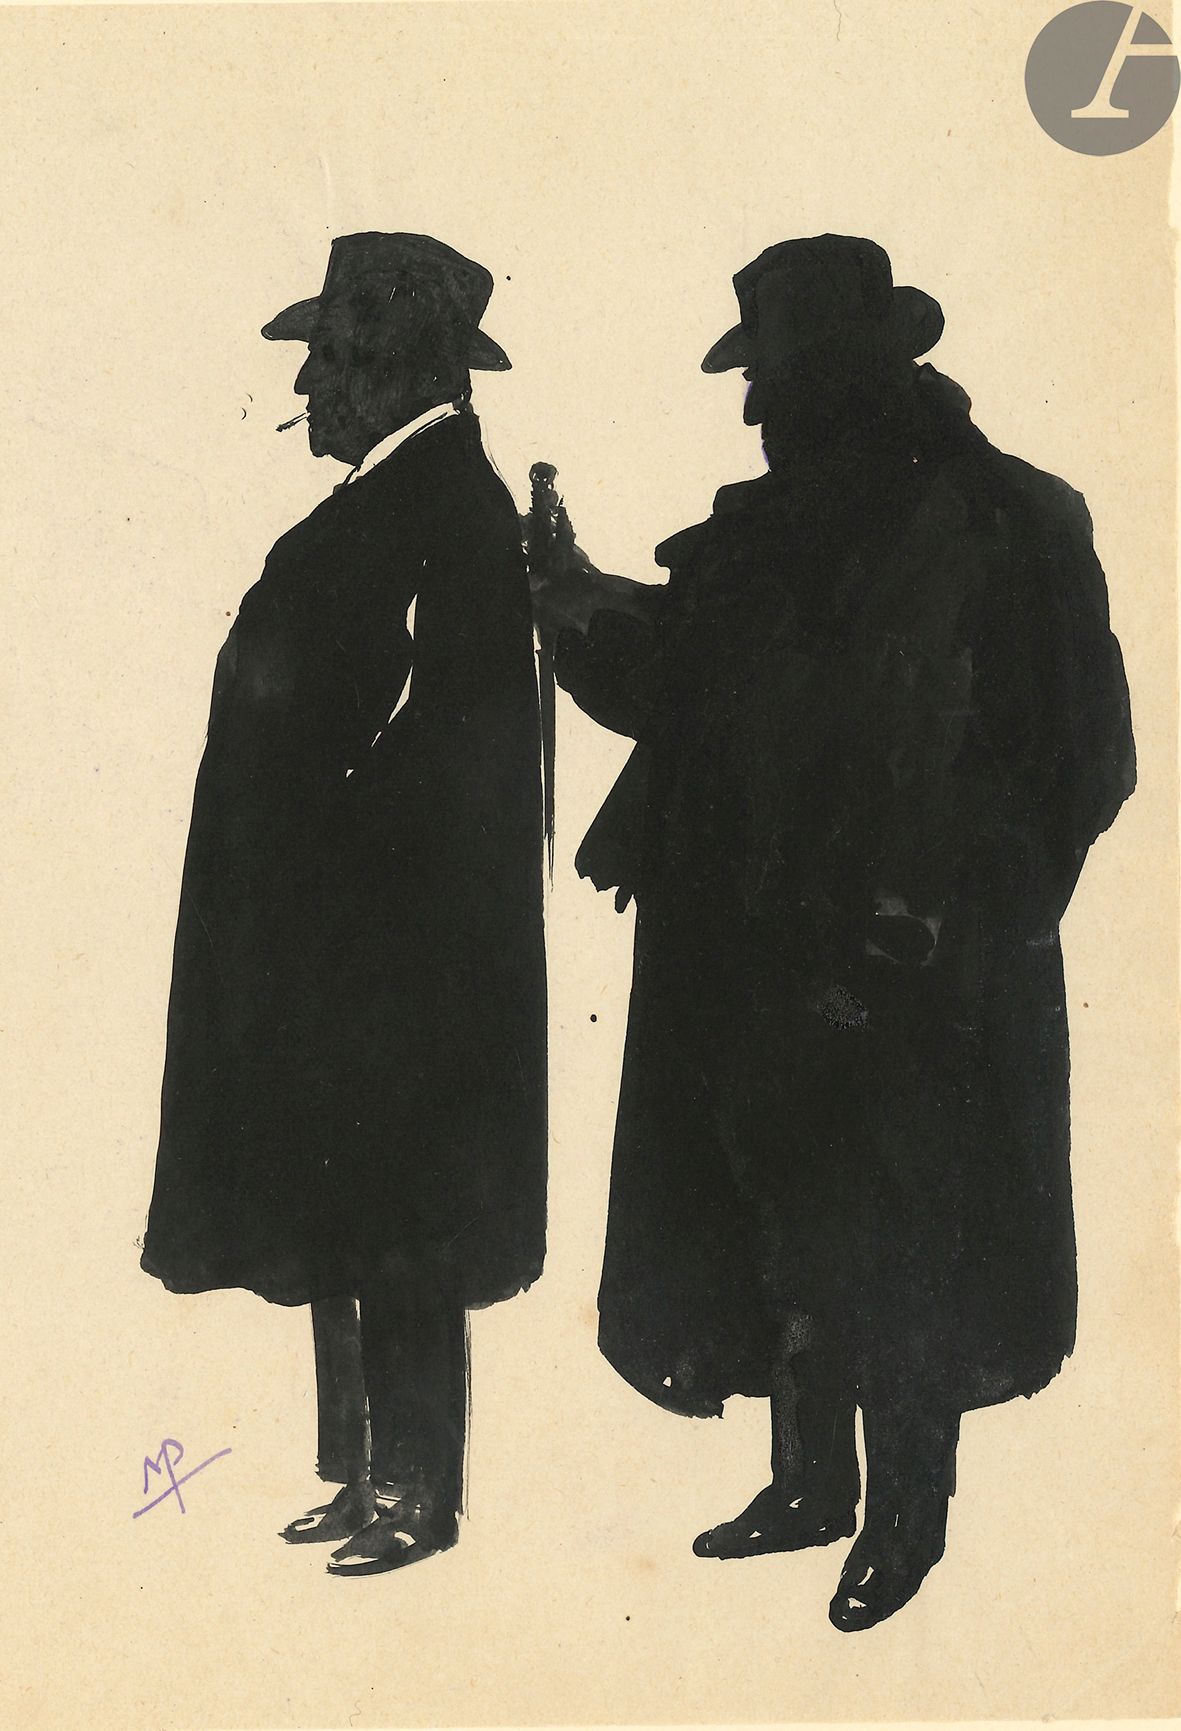 Null [Sacha GUITRY]。莫里斯-佩伦内（1877-1950）。吕西安和萨沙-吉特里。印度水墨画，左下角署名 "MP"。

吕西安-吉特里的影子，&hellip;